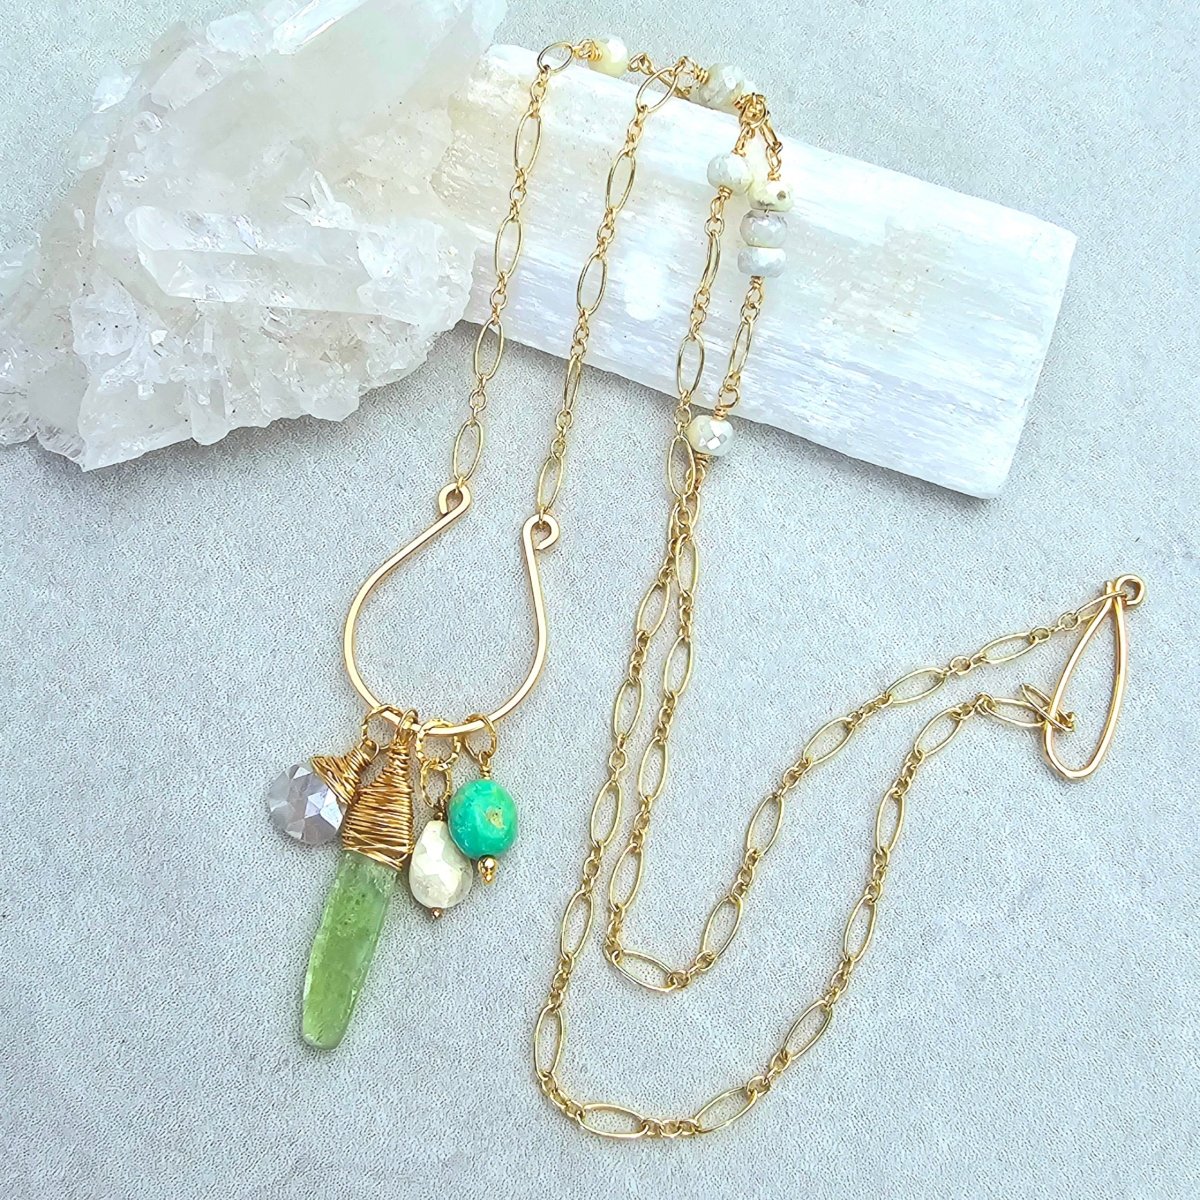 Green Kyanite, Turquoise, & Silverite Necklace #8063James & JezebelleNecklace